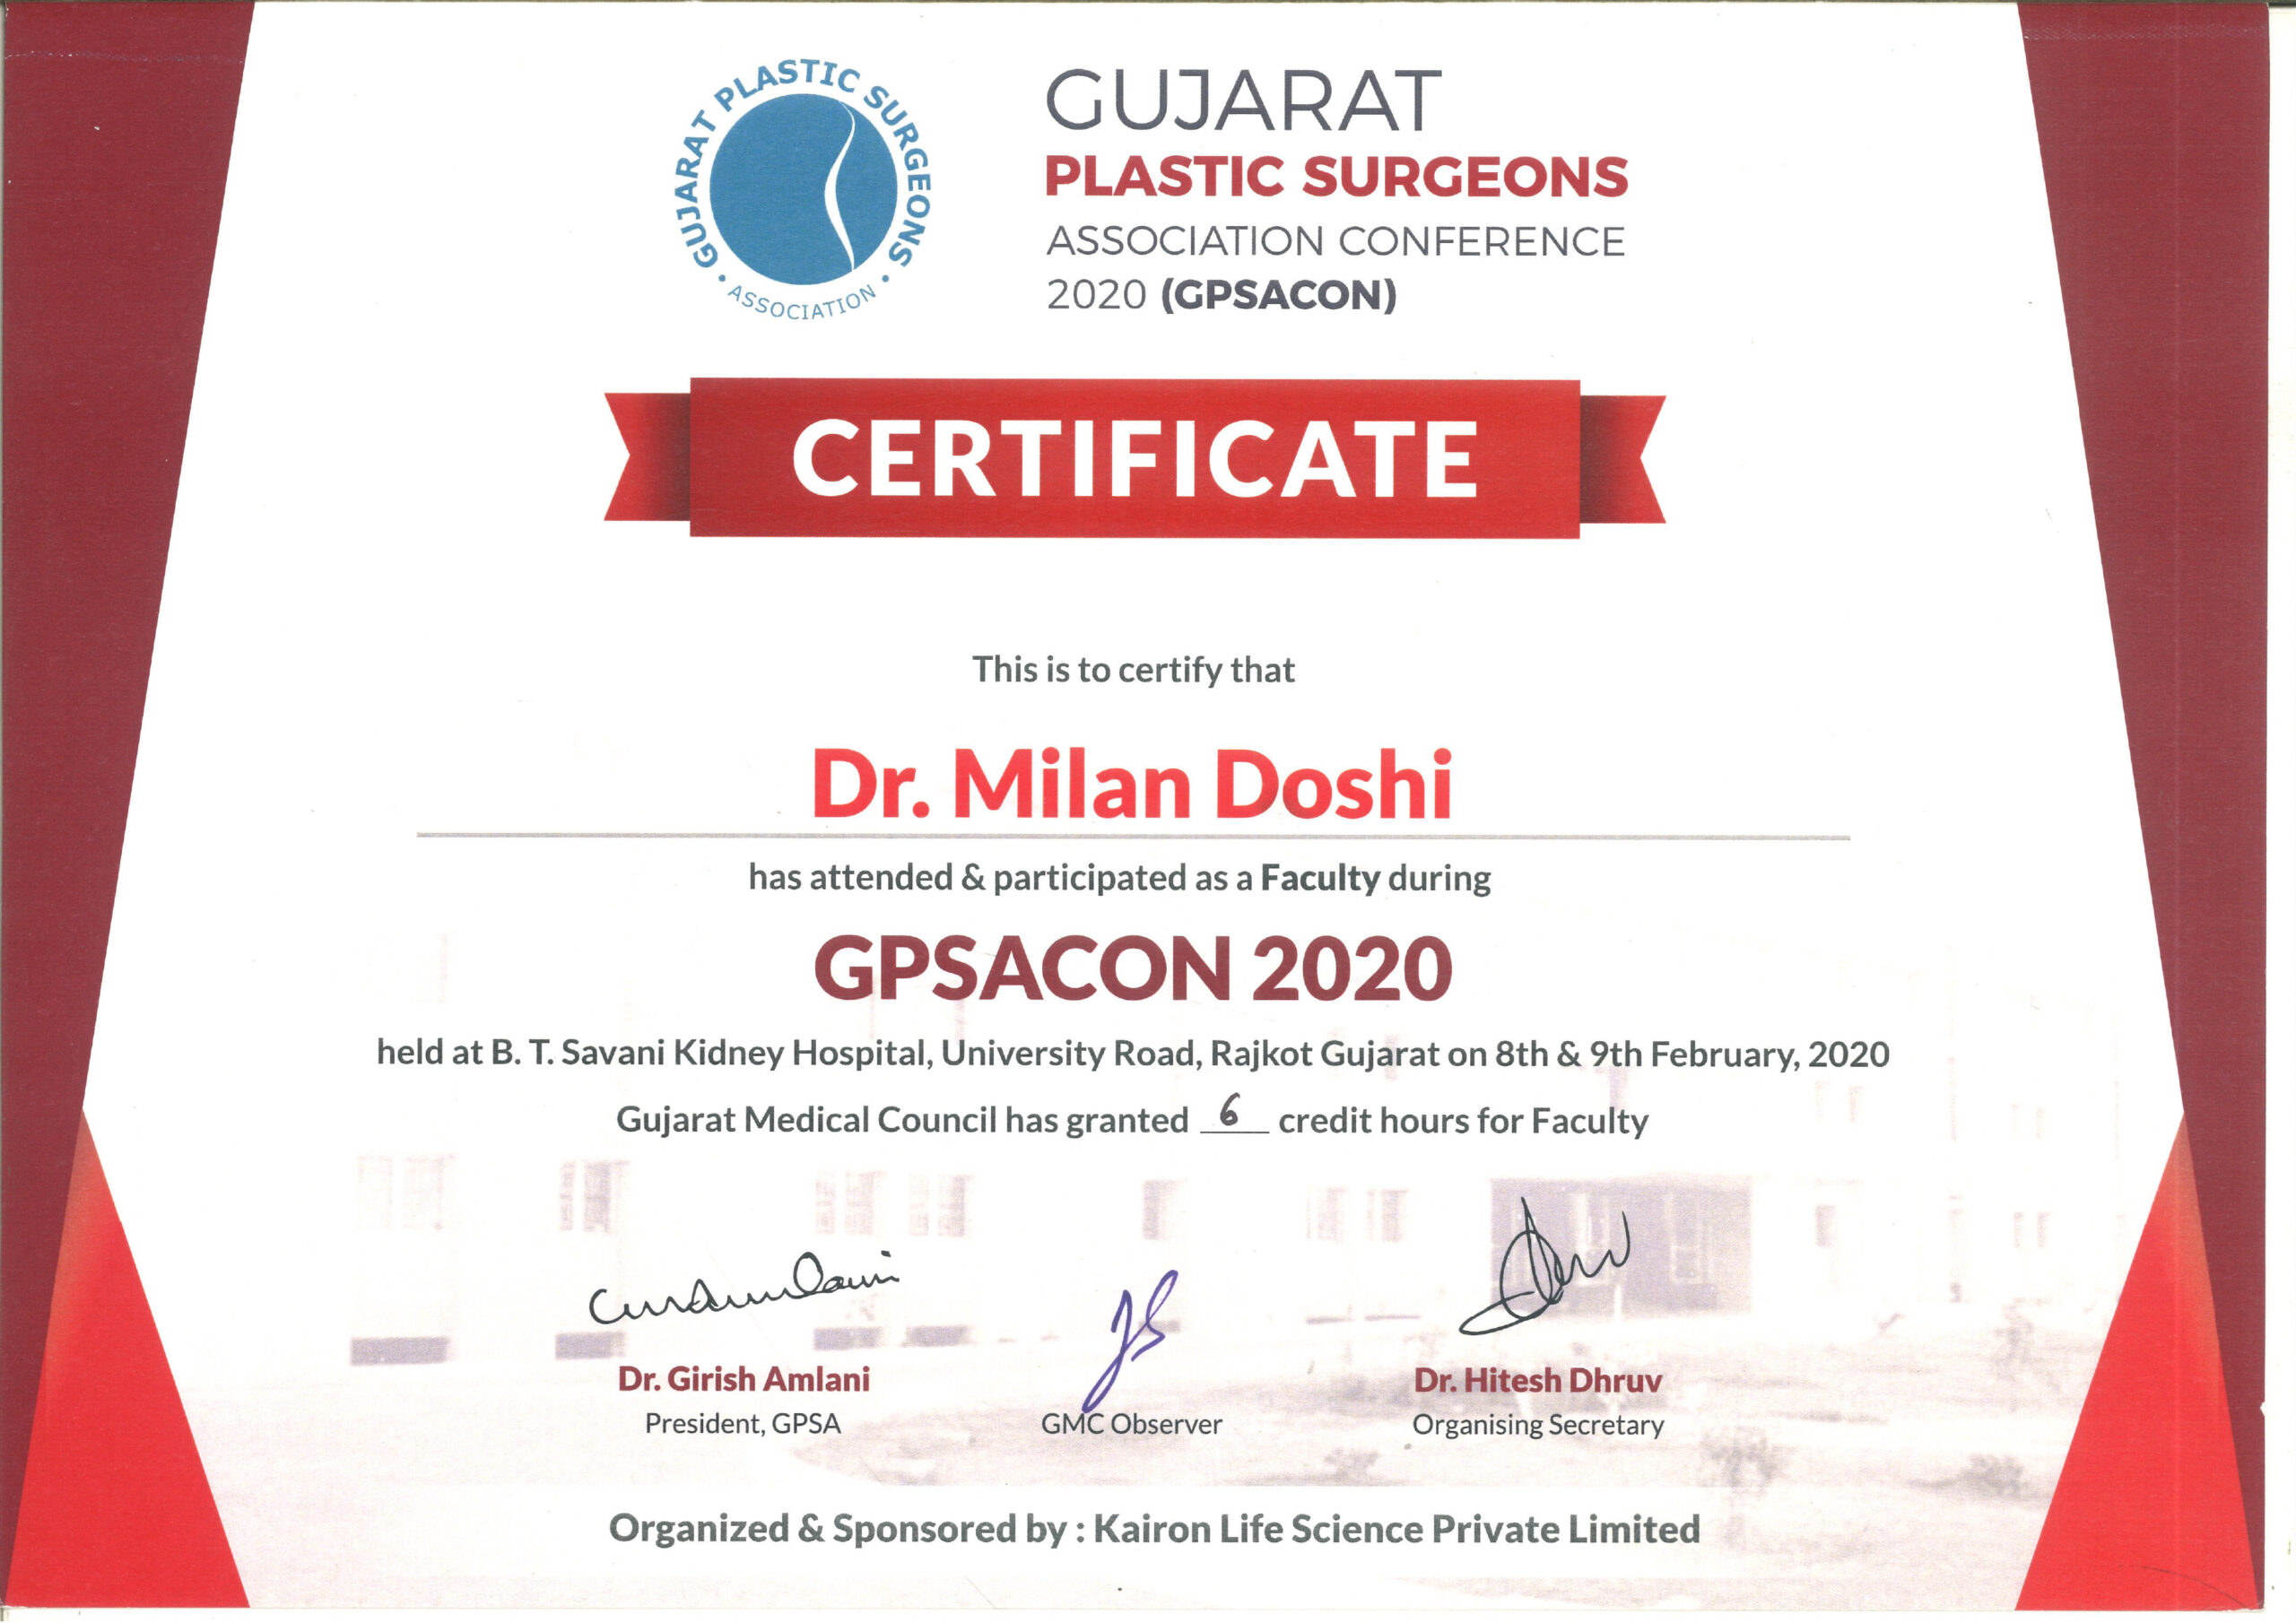 GPSACON 2020 on 8th and 9th February 2020 held at B.T. Savani Kidney Hospital, Gujarat